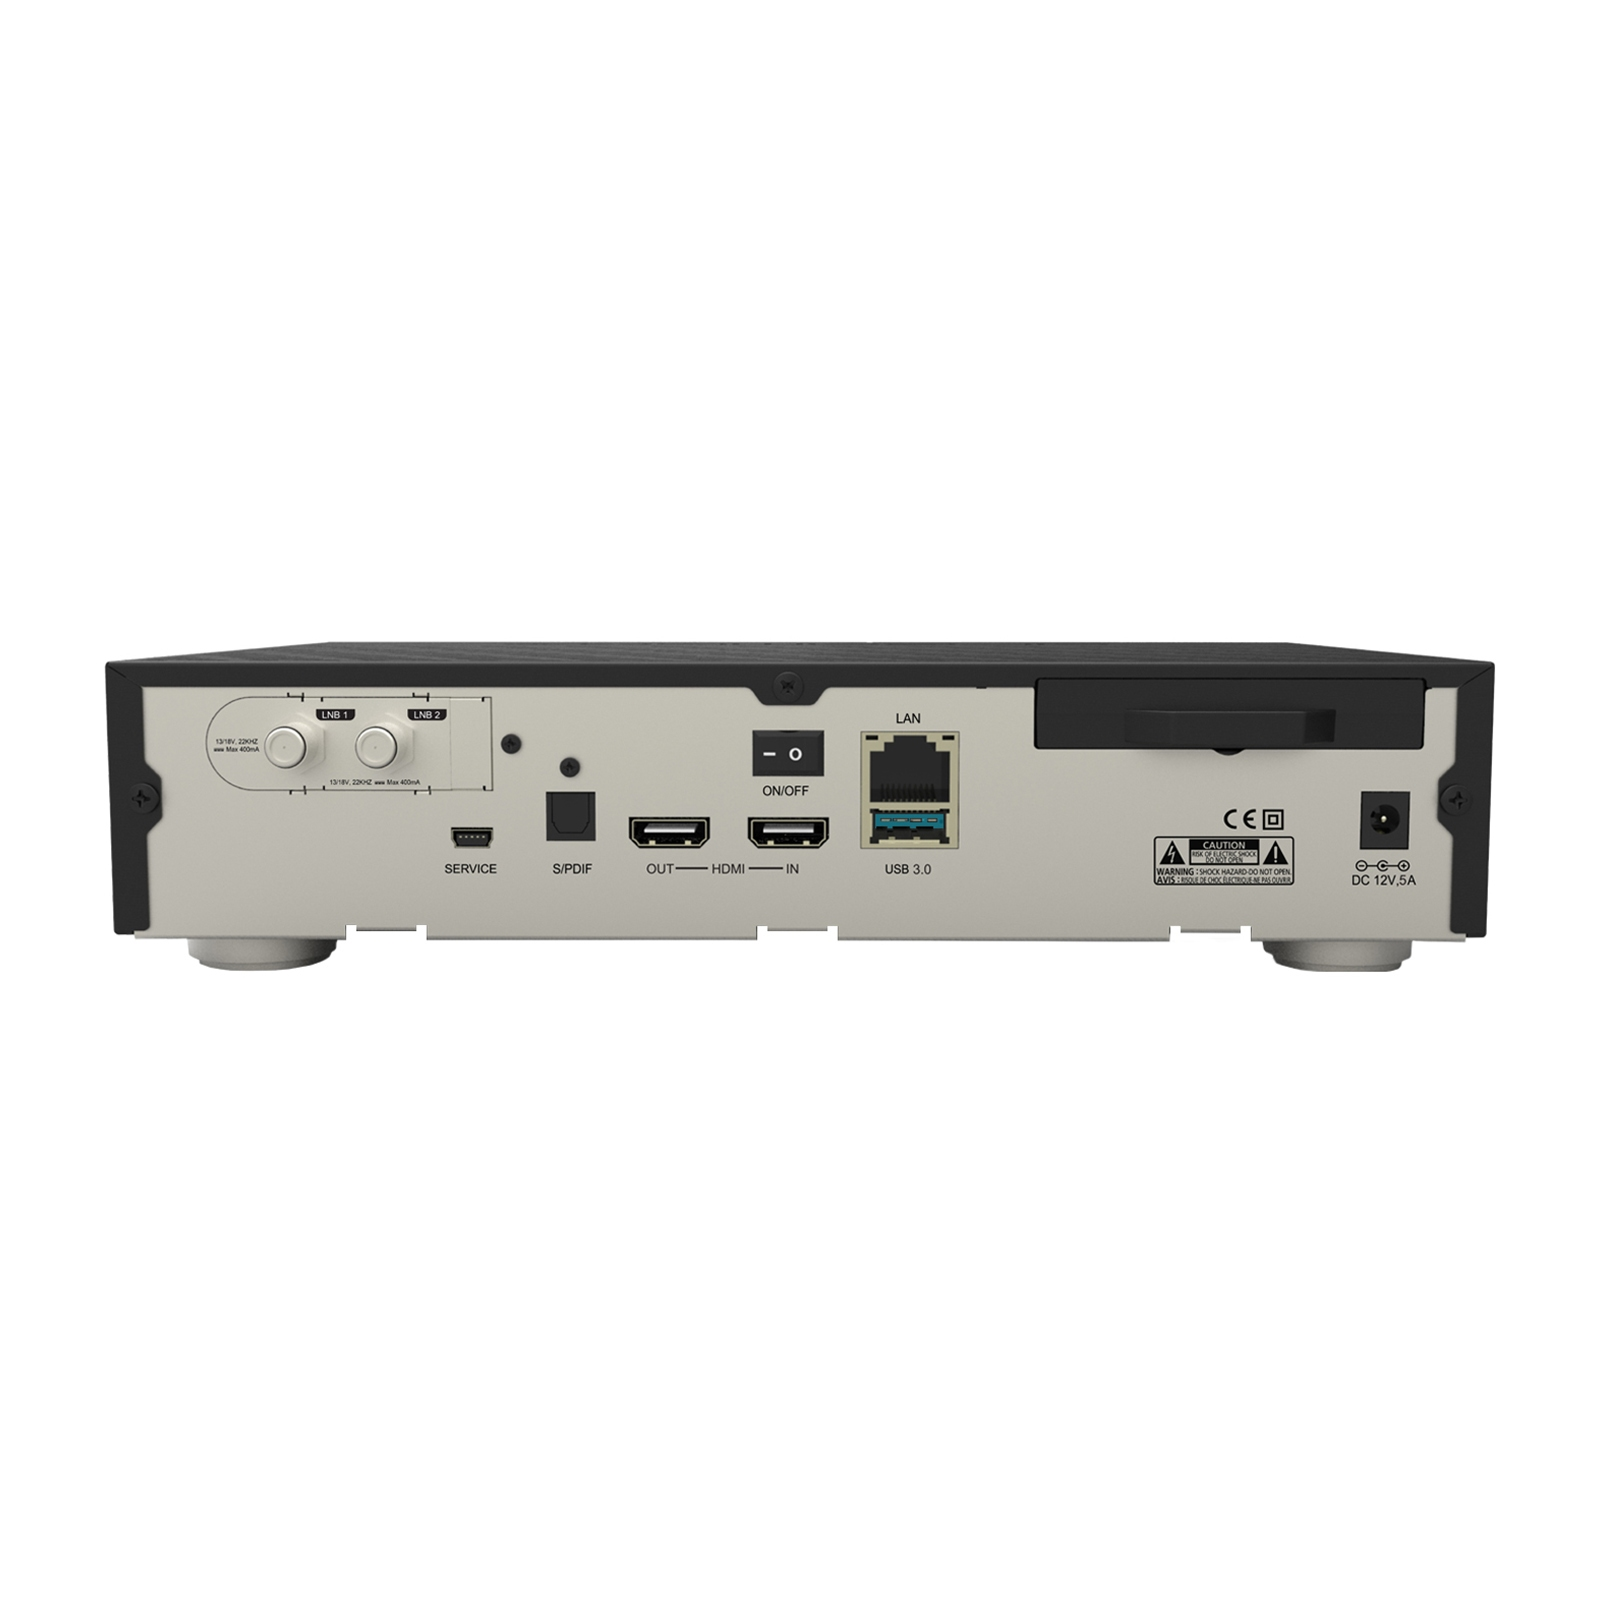 DREAM MULTIMEDIA DM900 RC20 Sat-Receiver 1xDVB-S2X (PVR-Funktion, Schwarz) Tuner, Twin MS 500GB